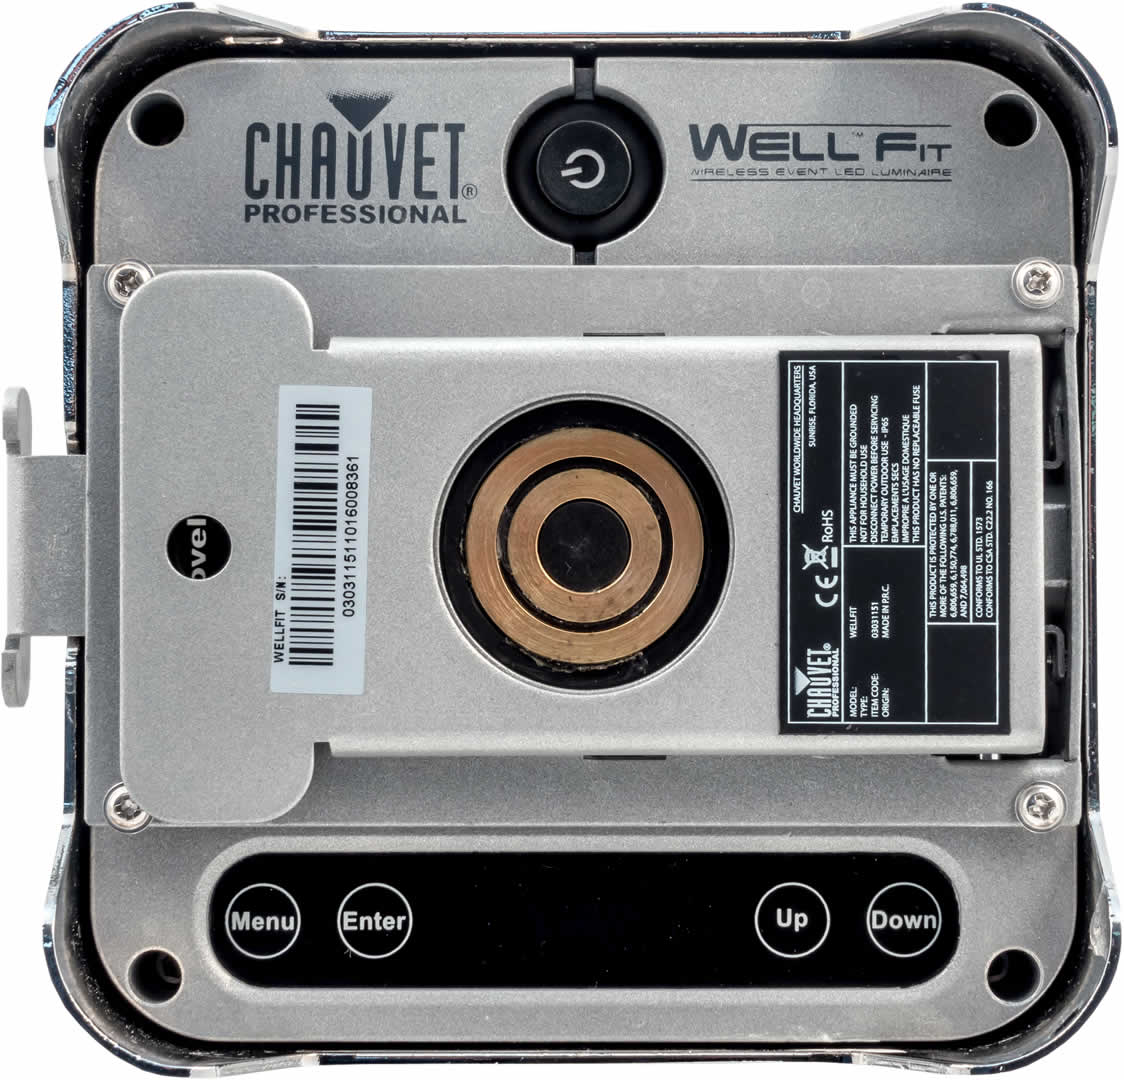 chauvet_well-fit-c_07.jpg